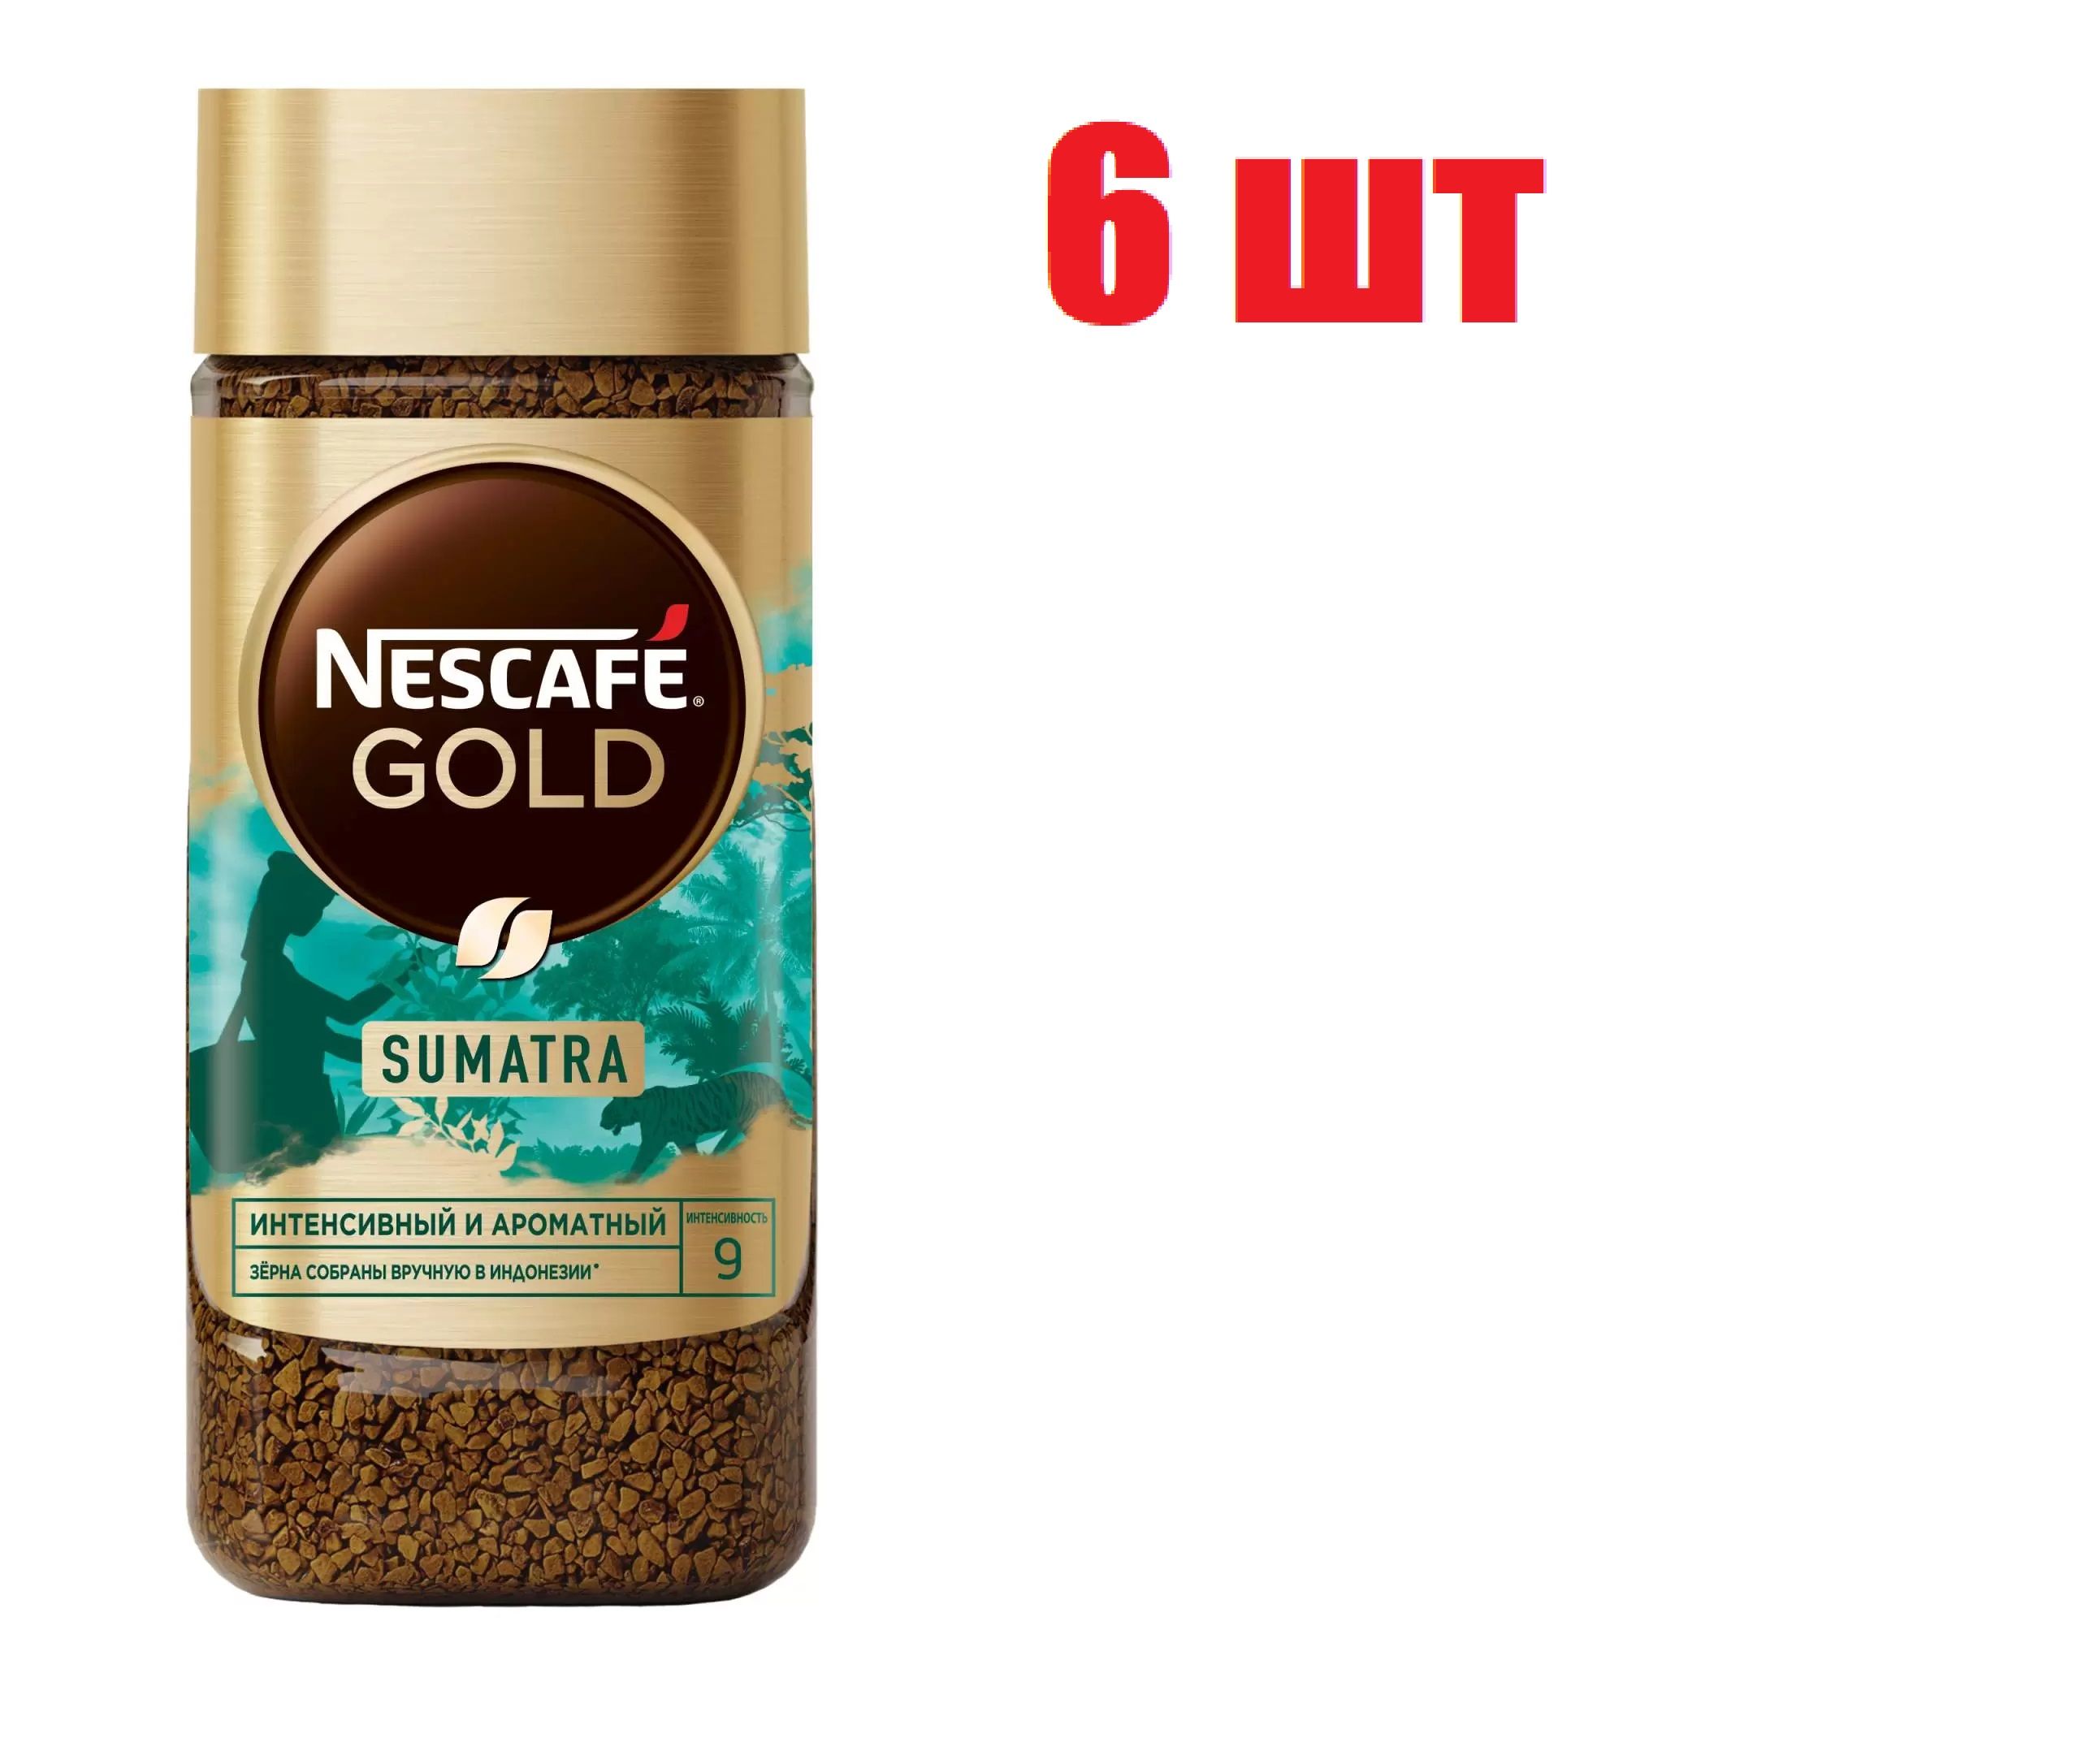 Nescafe gold intenso. Нескафе Голд Origins Sumatra 170гр.